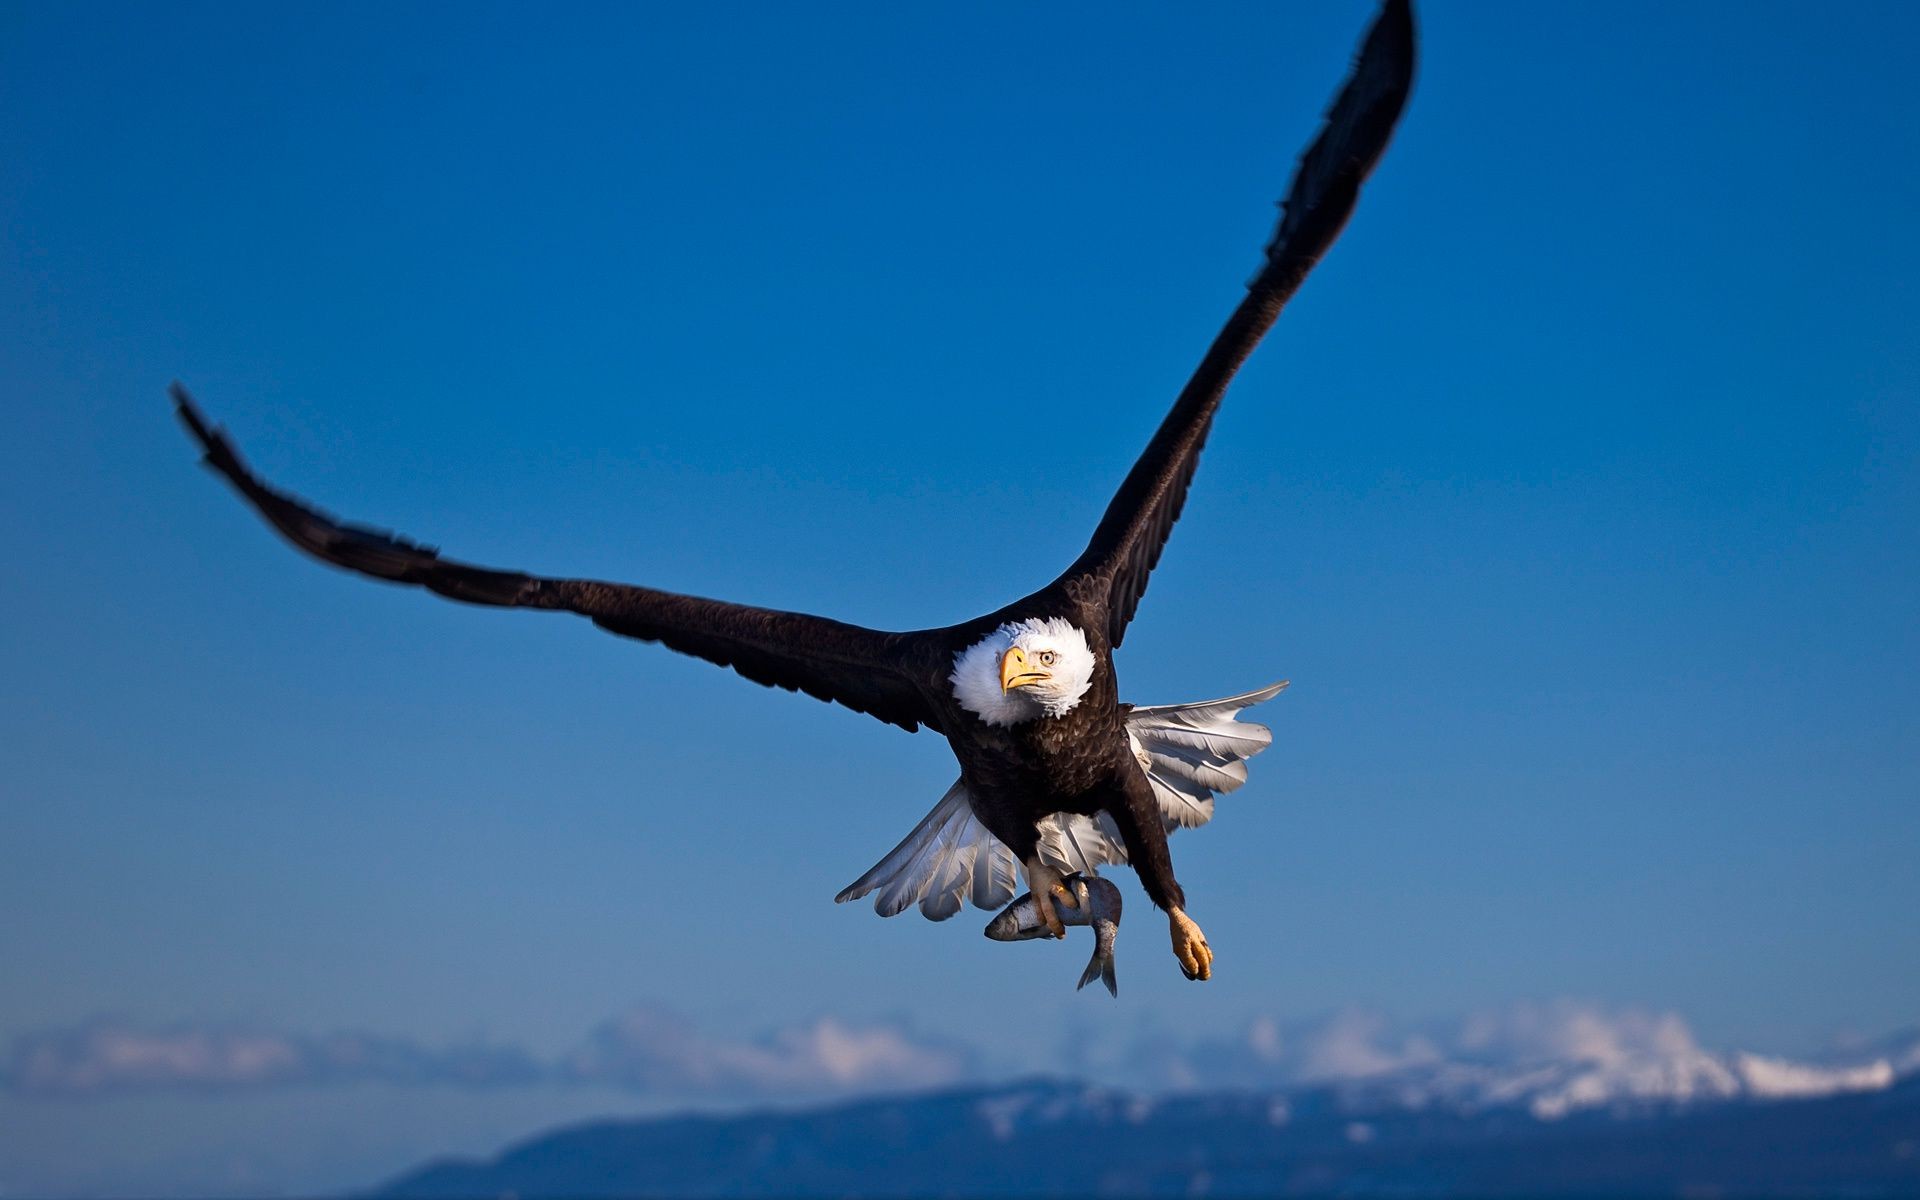 animals bird raptor eagle flight sky wildlife nature outdoors freedom wing bald eagle fly